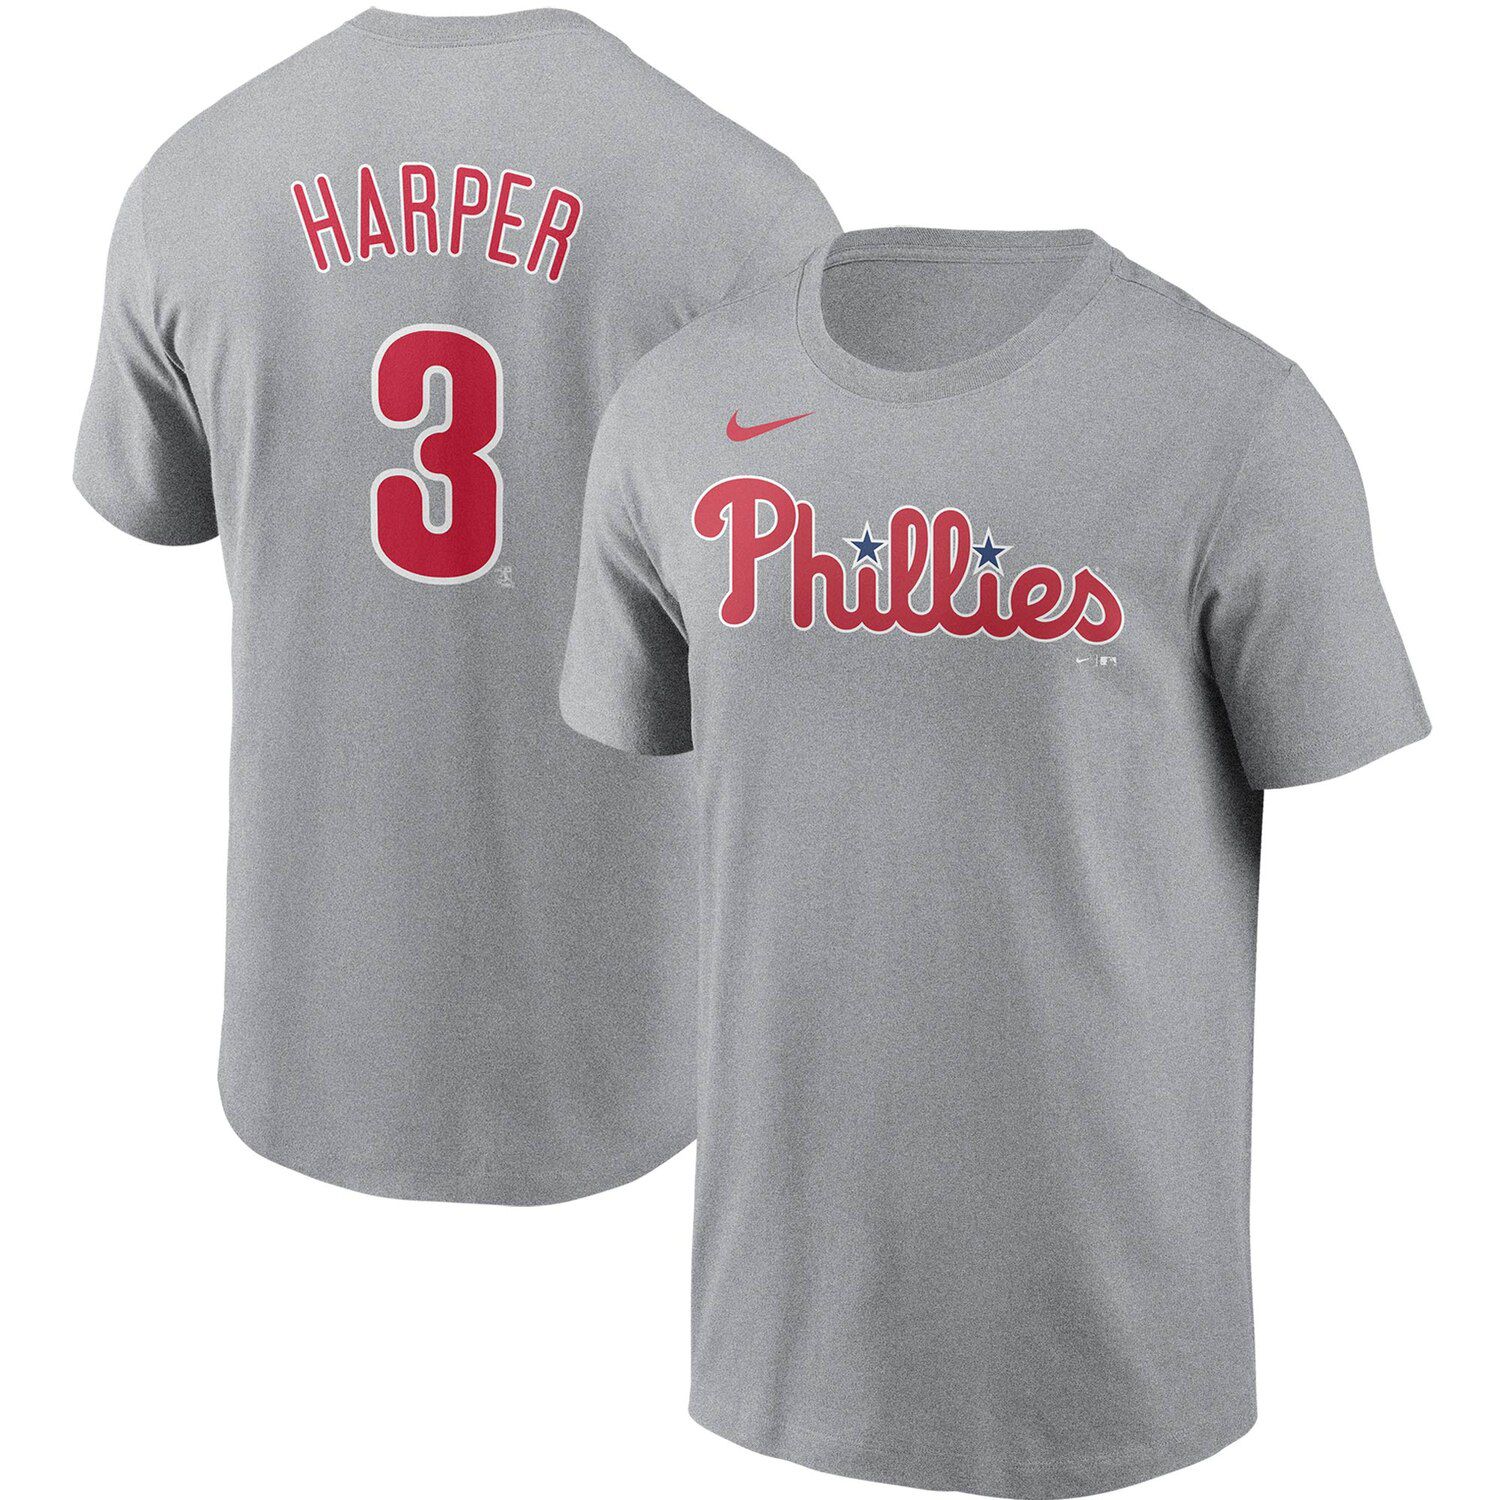 bryce harper phillies shirt